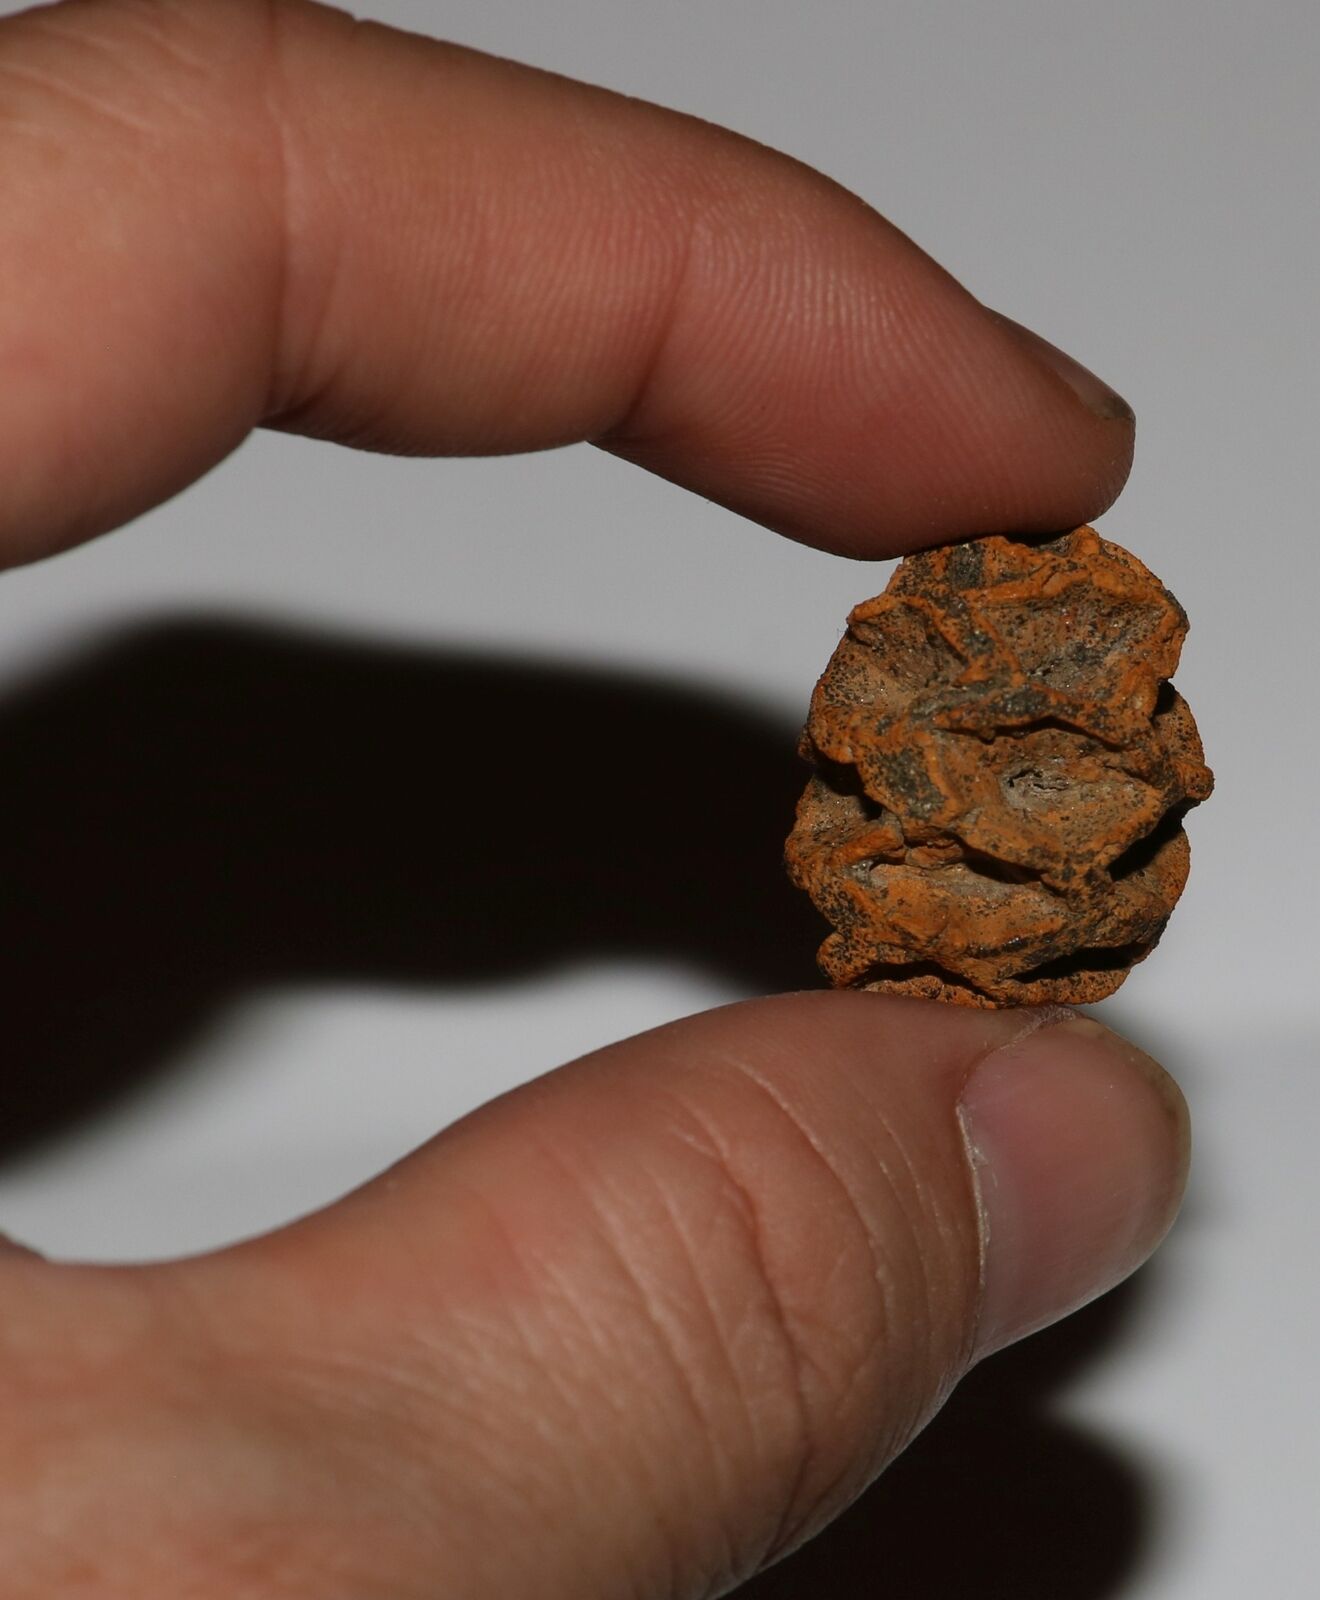 Metasequoia Pine Cone - Dinosaur Age Hell Creek Cretaceous - Super Detailed